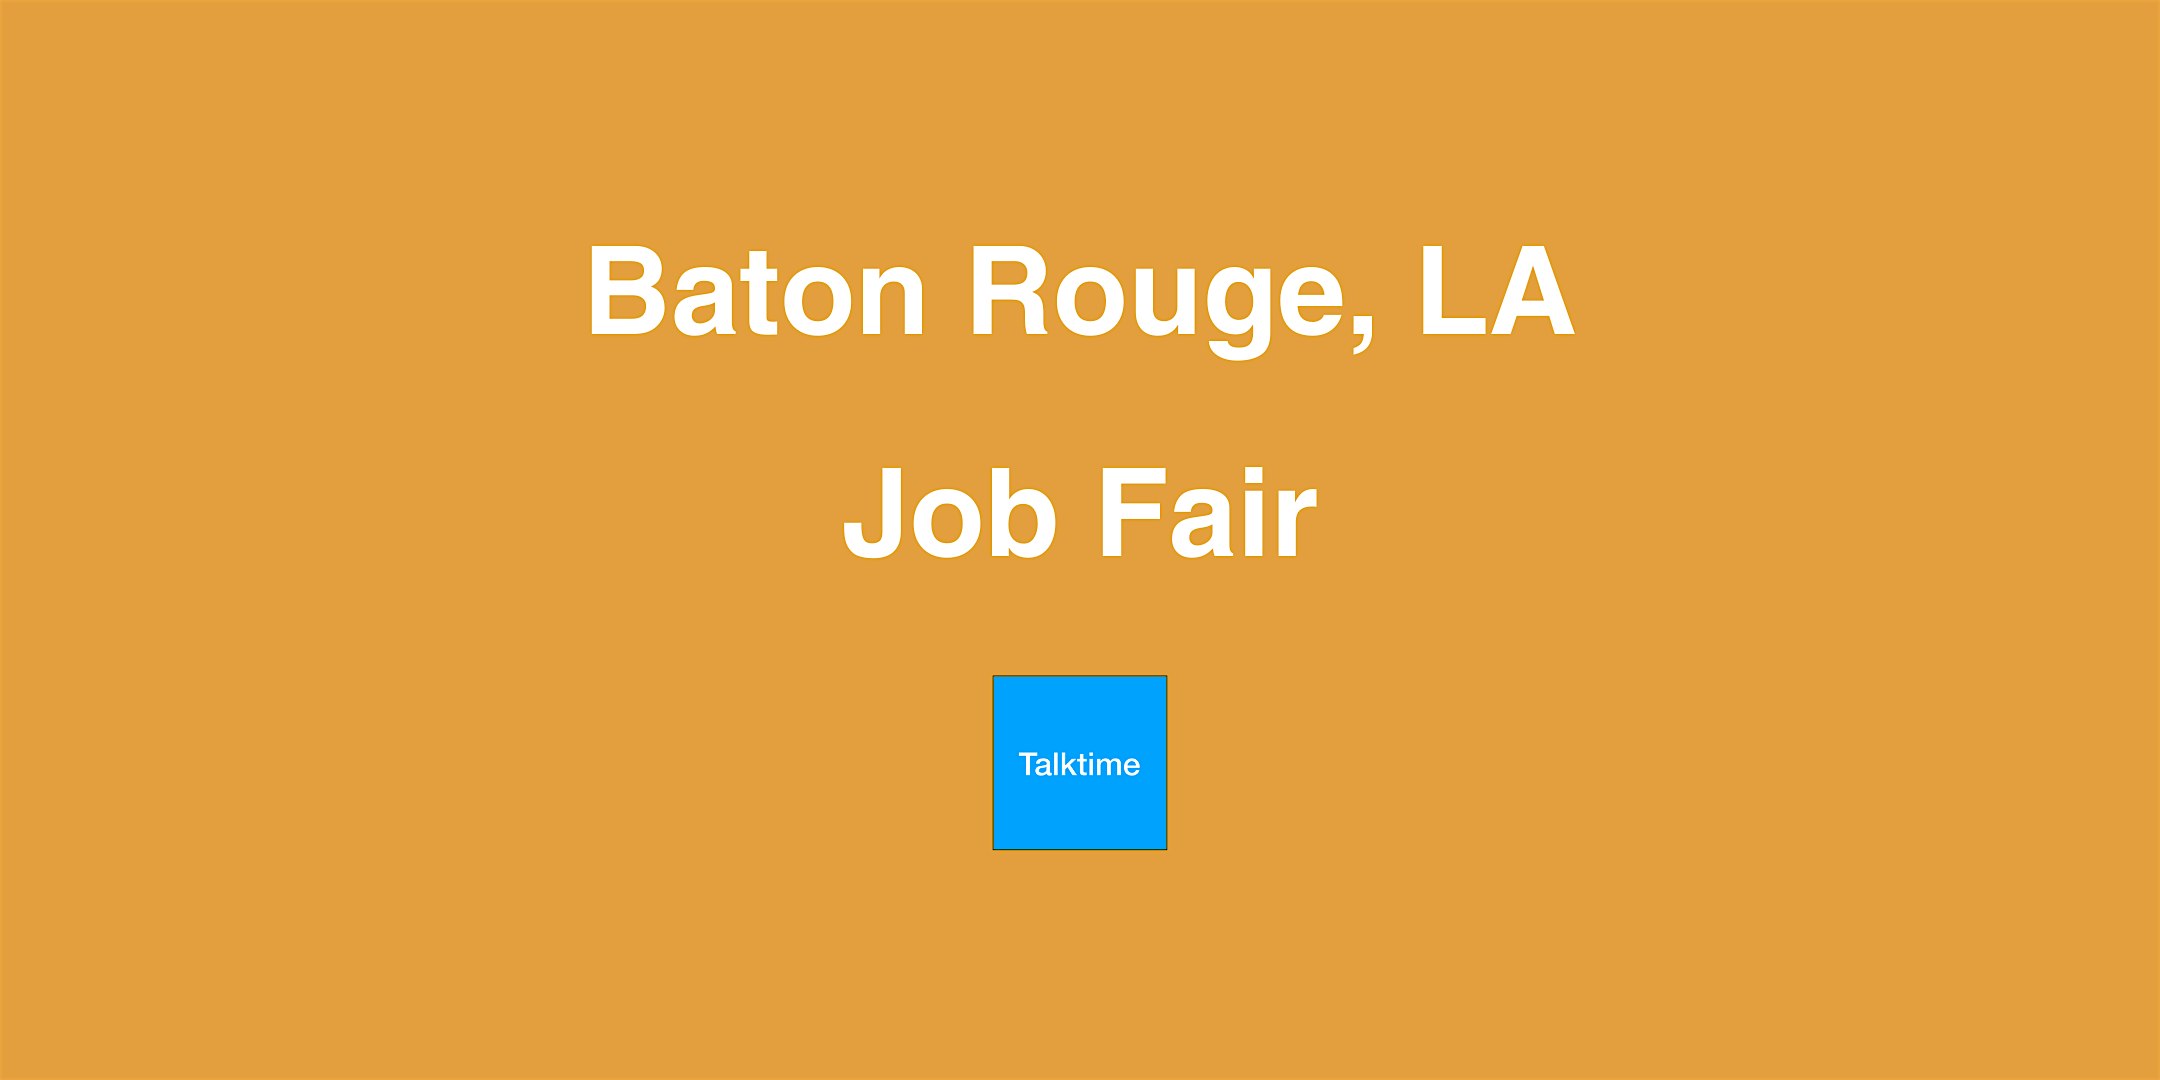 Job Fair - Baton Rouge